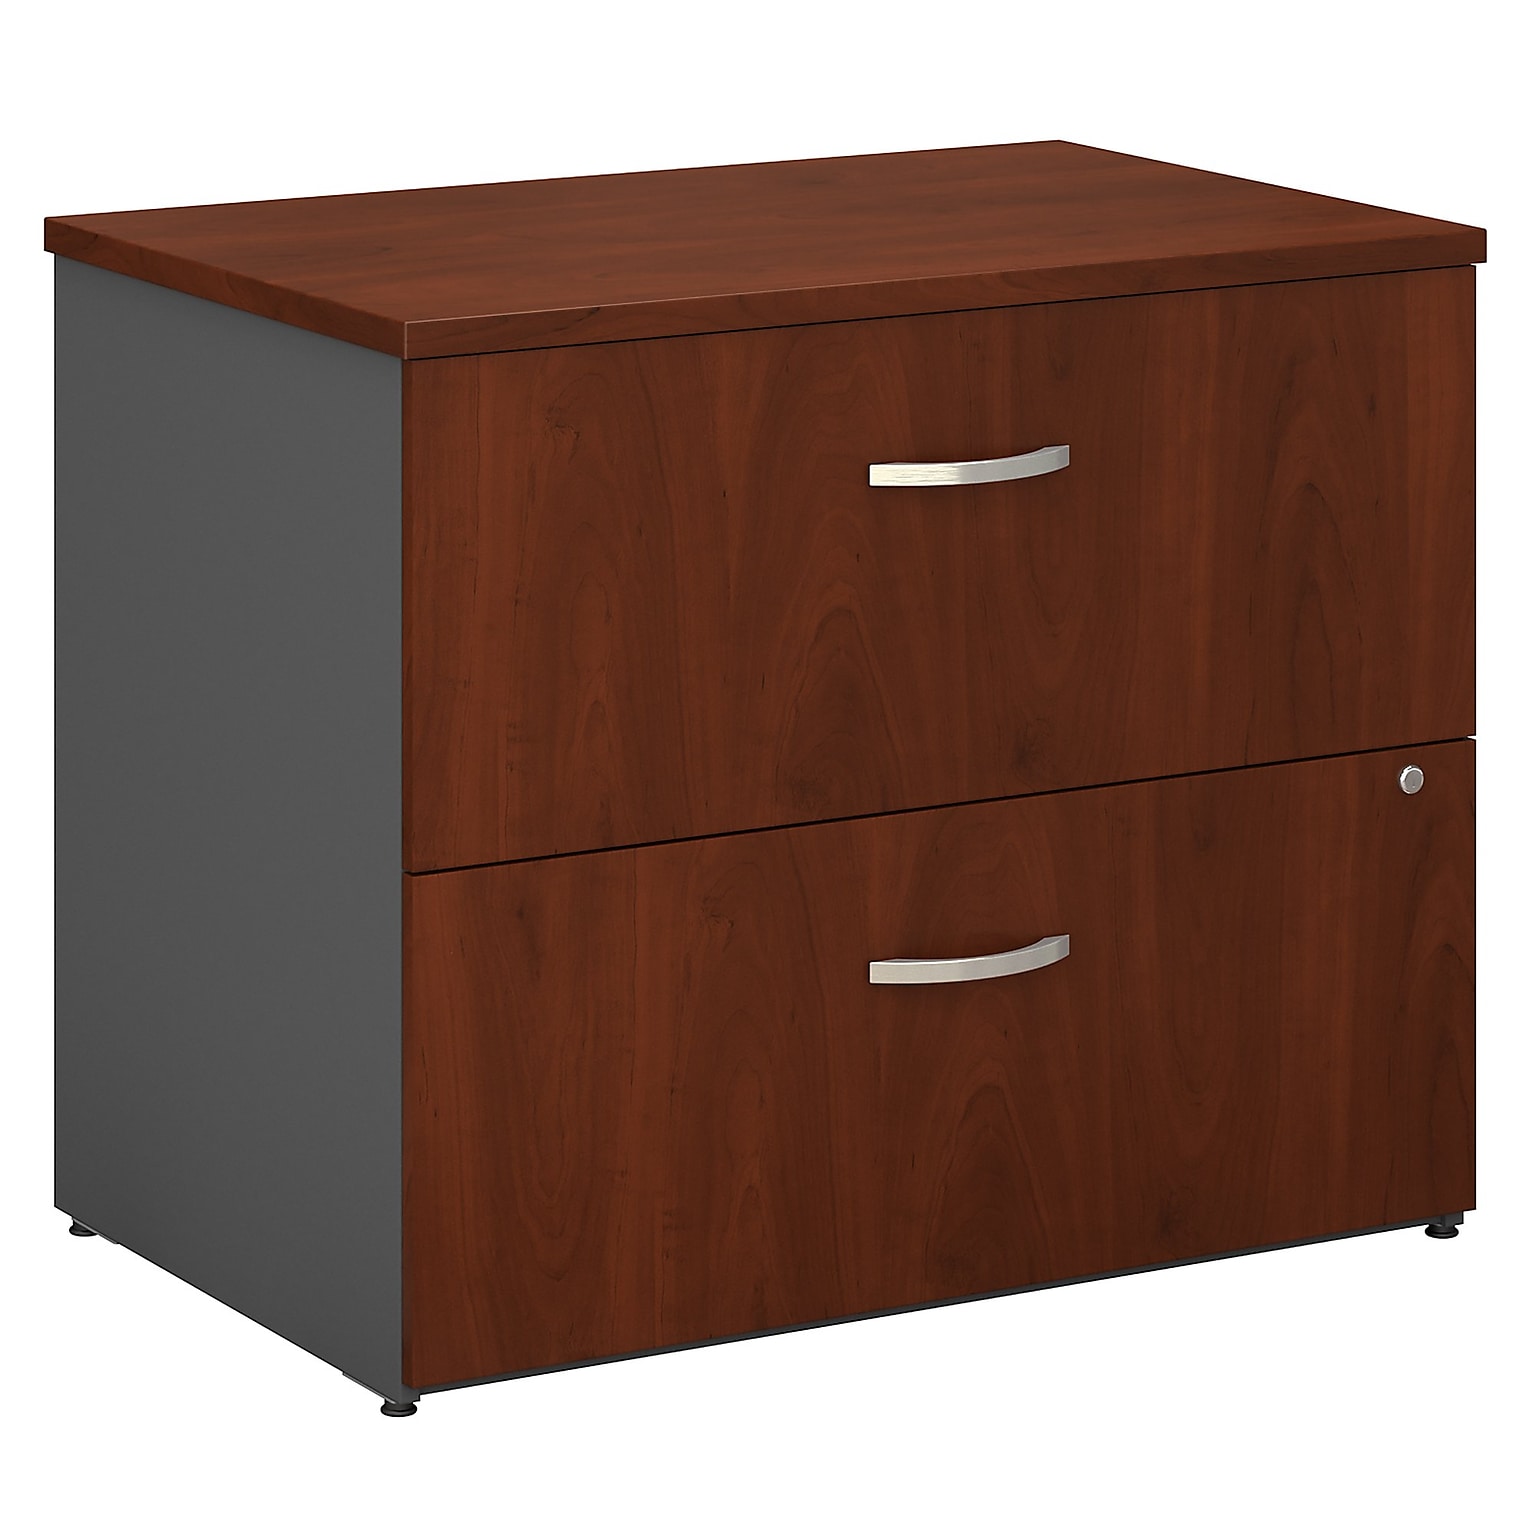 Bush Business Furniture Westfield Lateral File Cabinet, Hansen Cherry/Graphite Gray, Assembled (WC24454CSU)